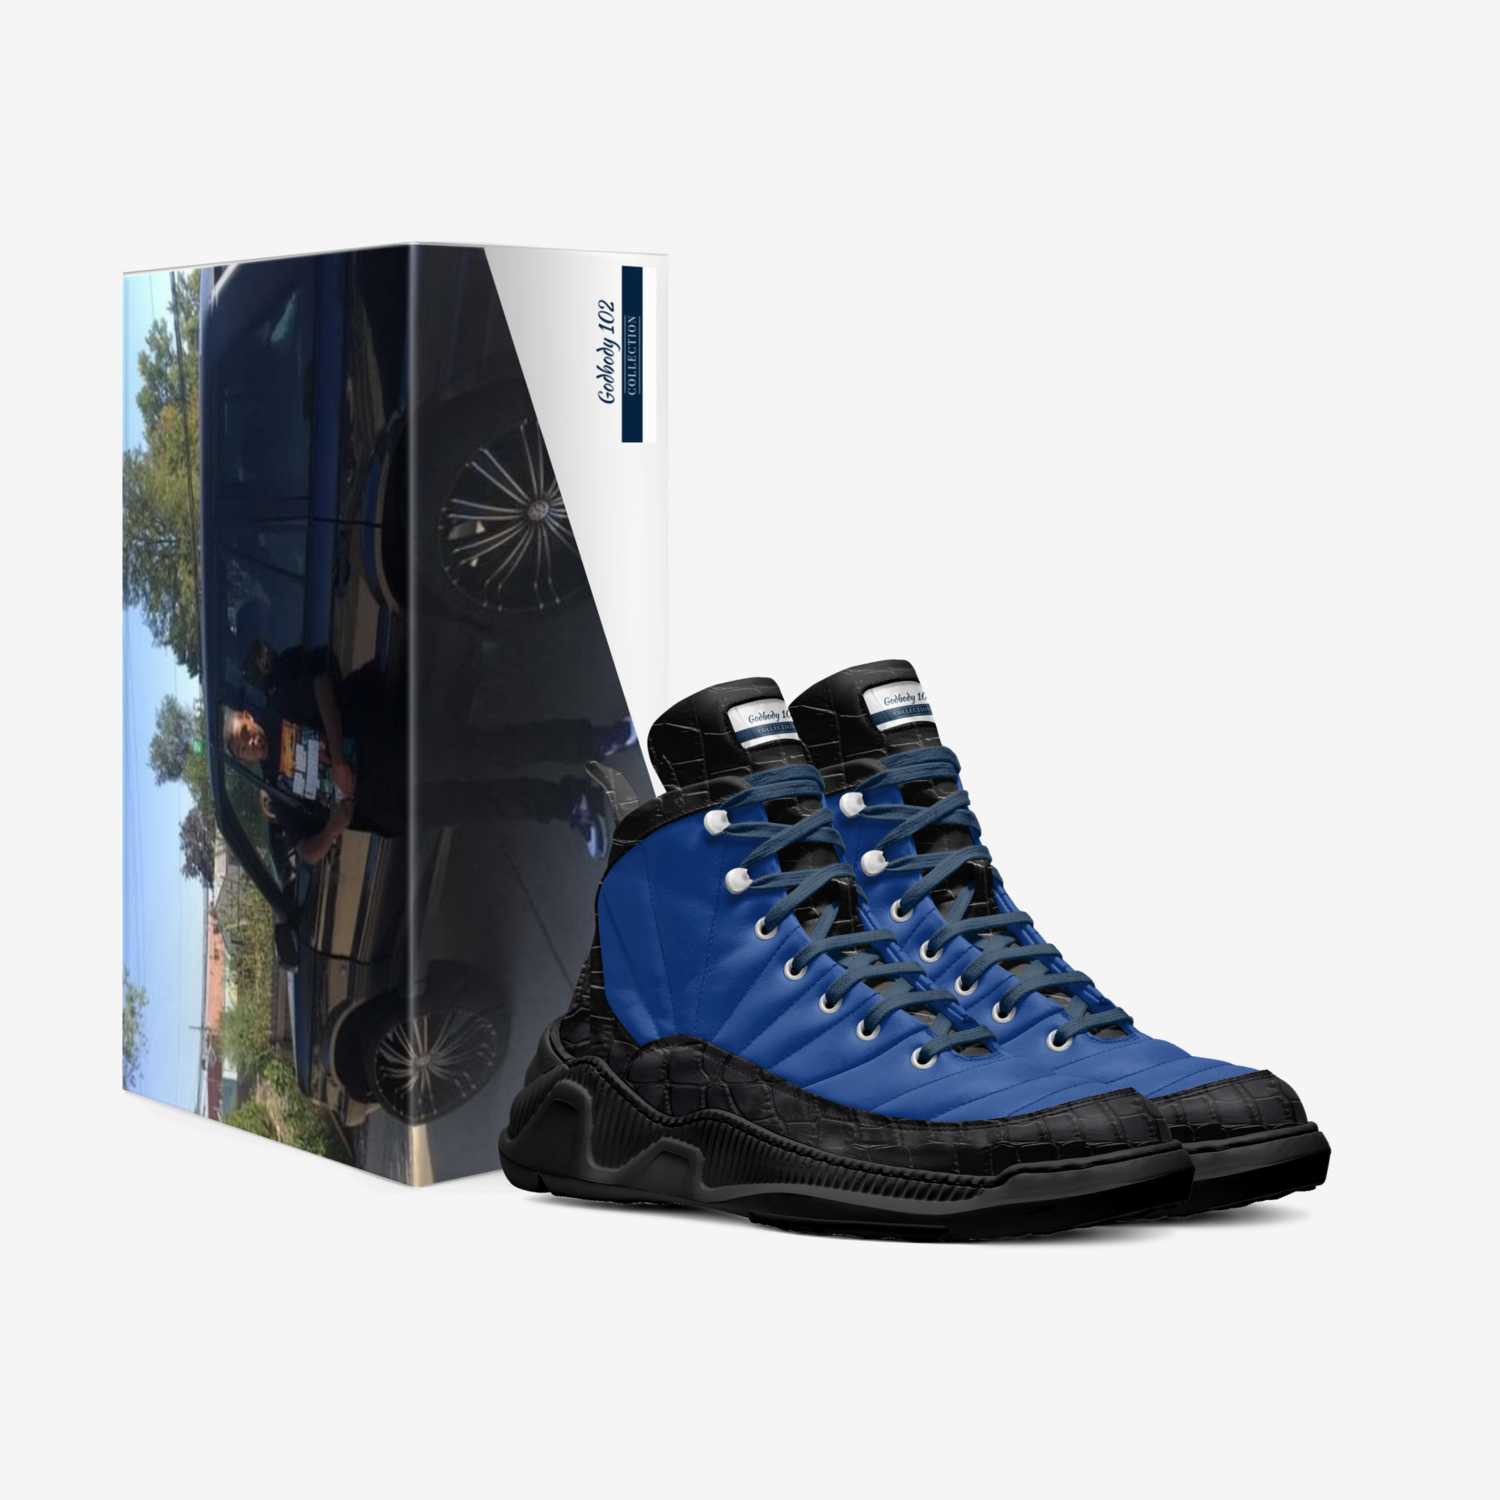 Godbody 102 custom made in Italy shoes by Damario Brady | Box view